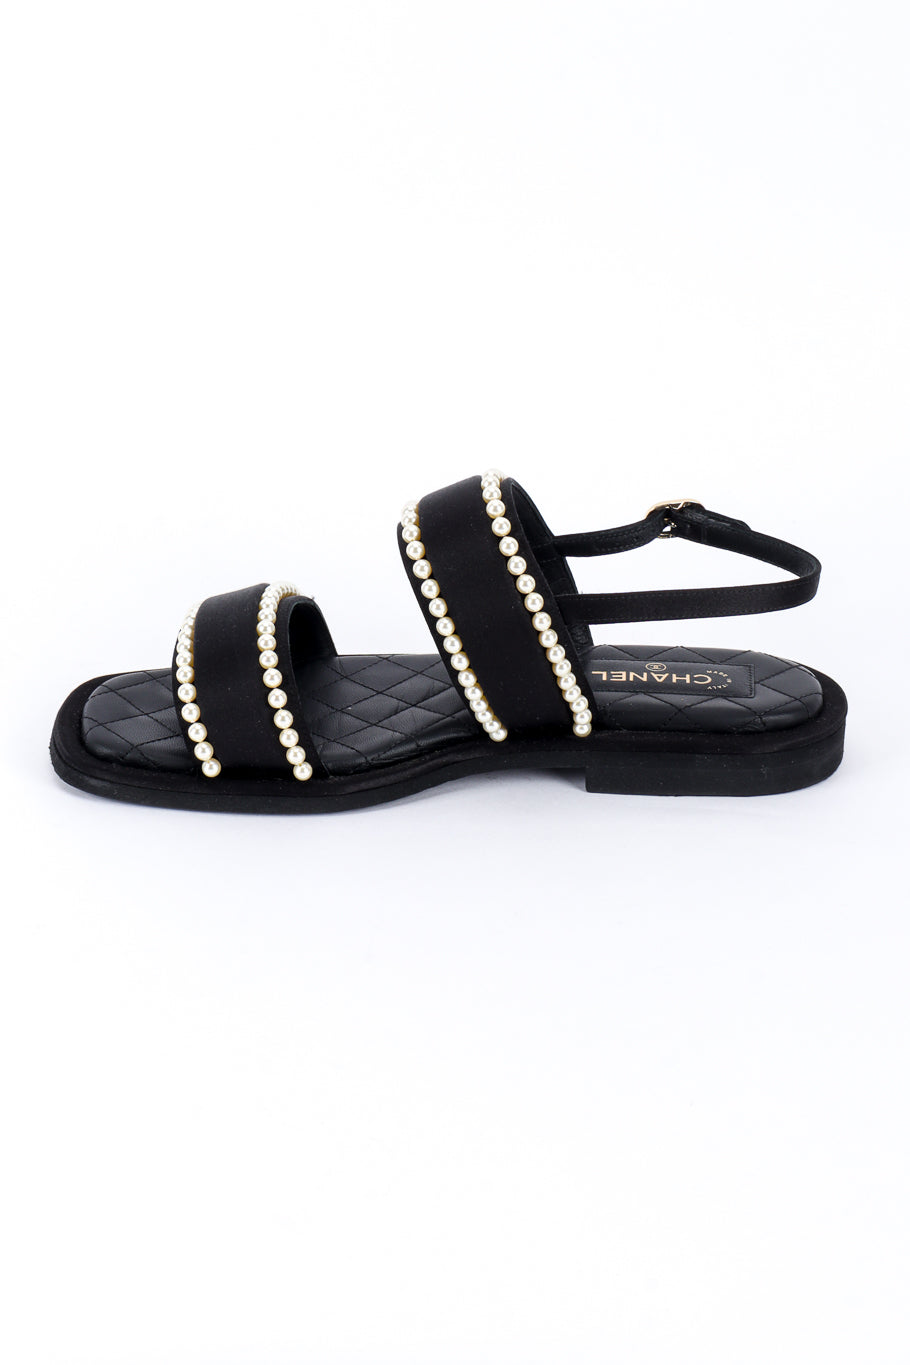 Chanel CC Satin & Pearl Sandals right shoe inner side @recess la